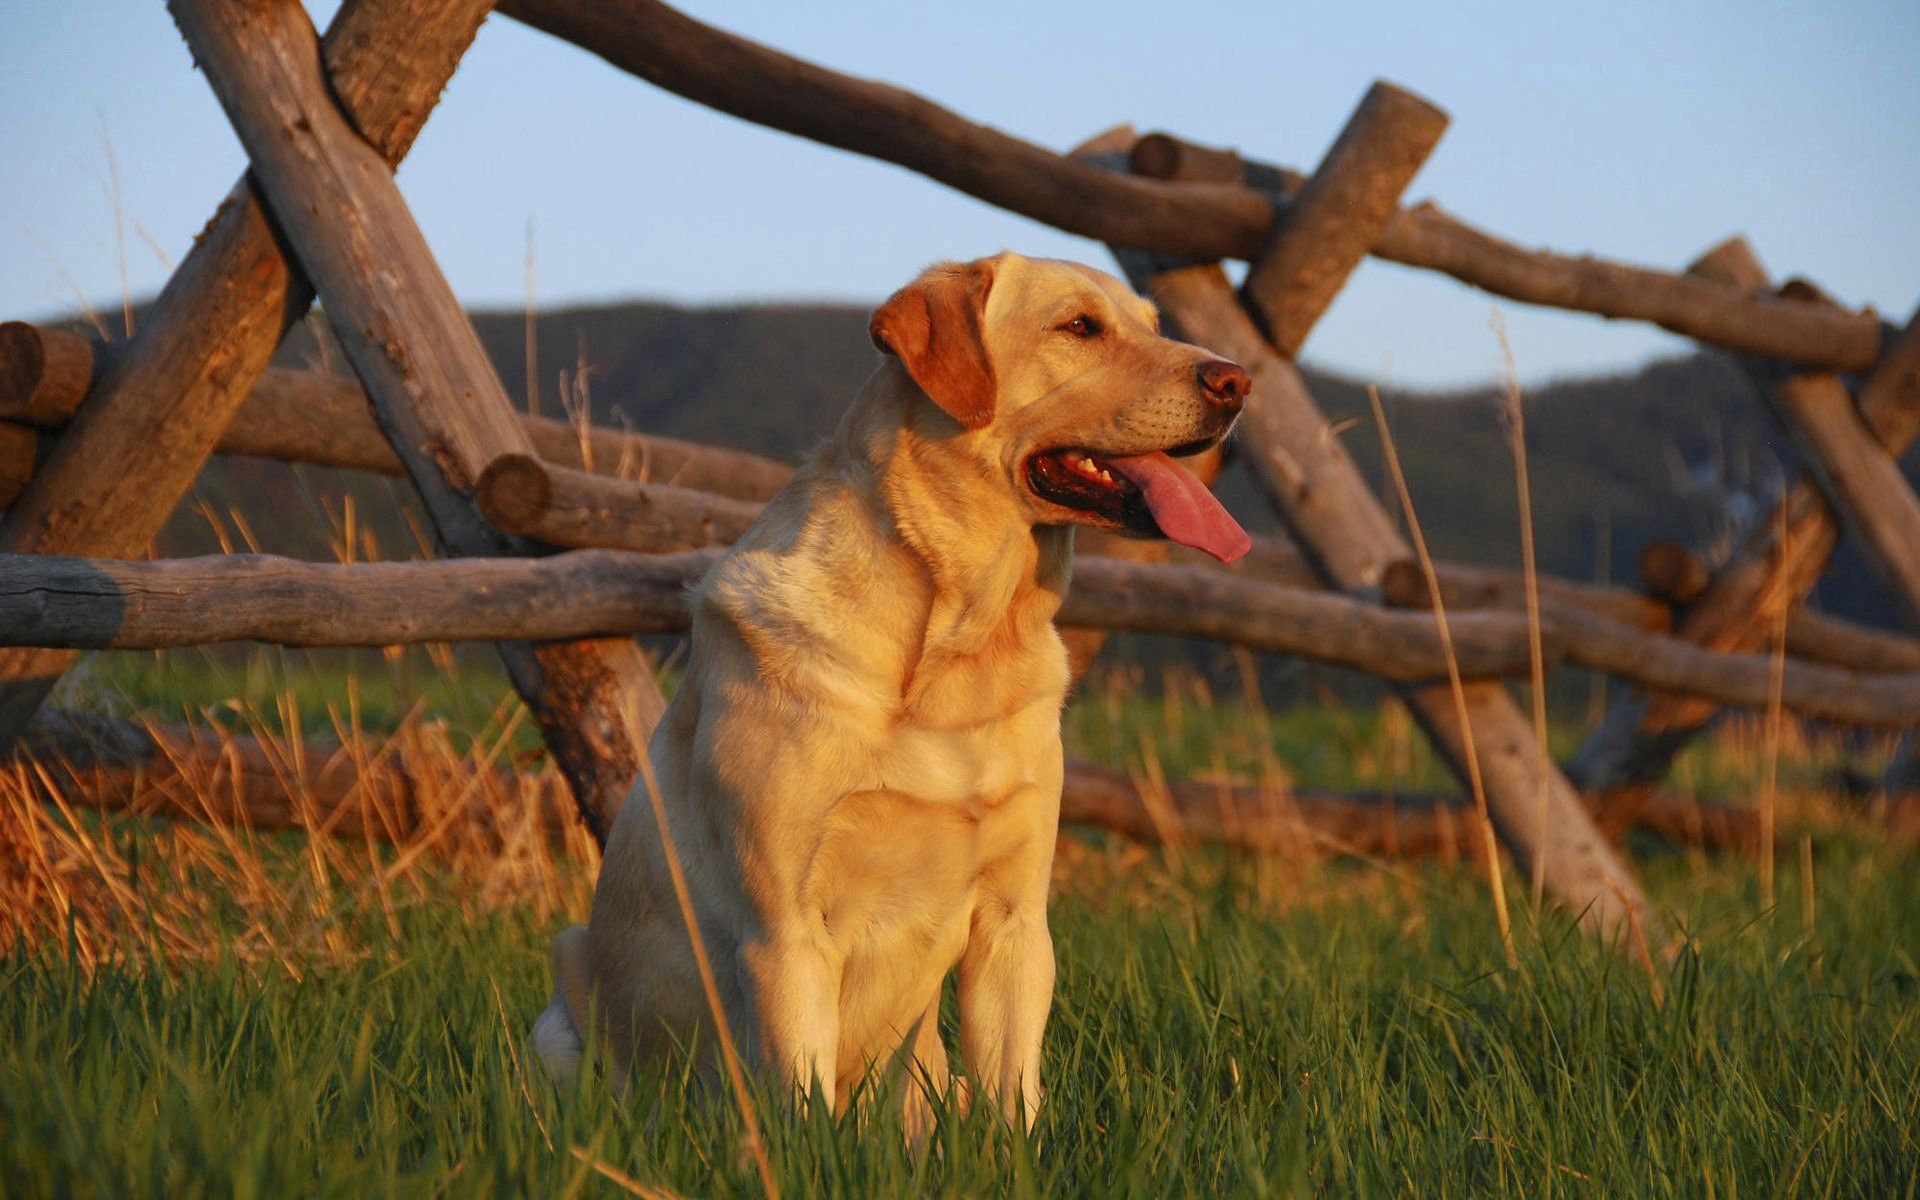 labrador, animals, sunset, grass, dog, fence, expectation, waiting